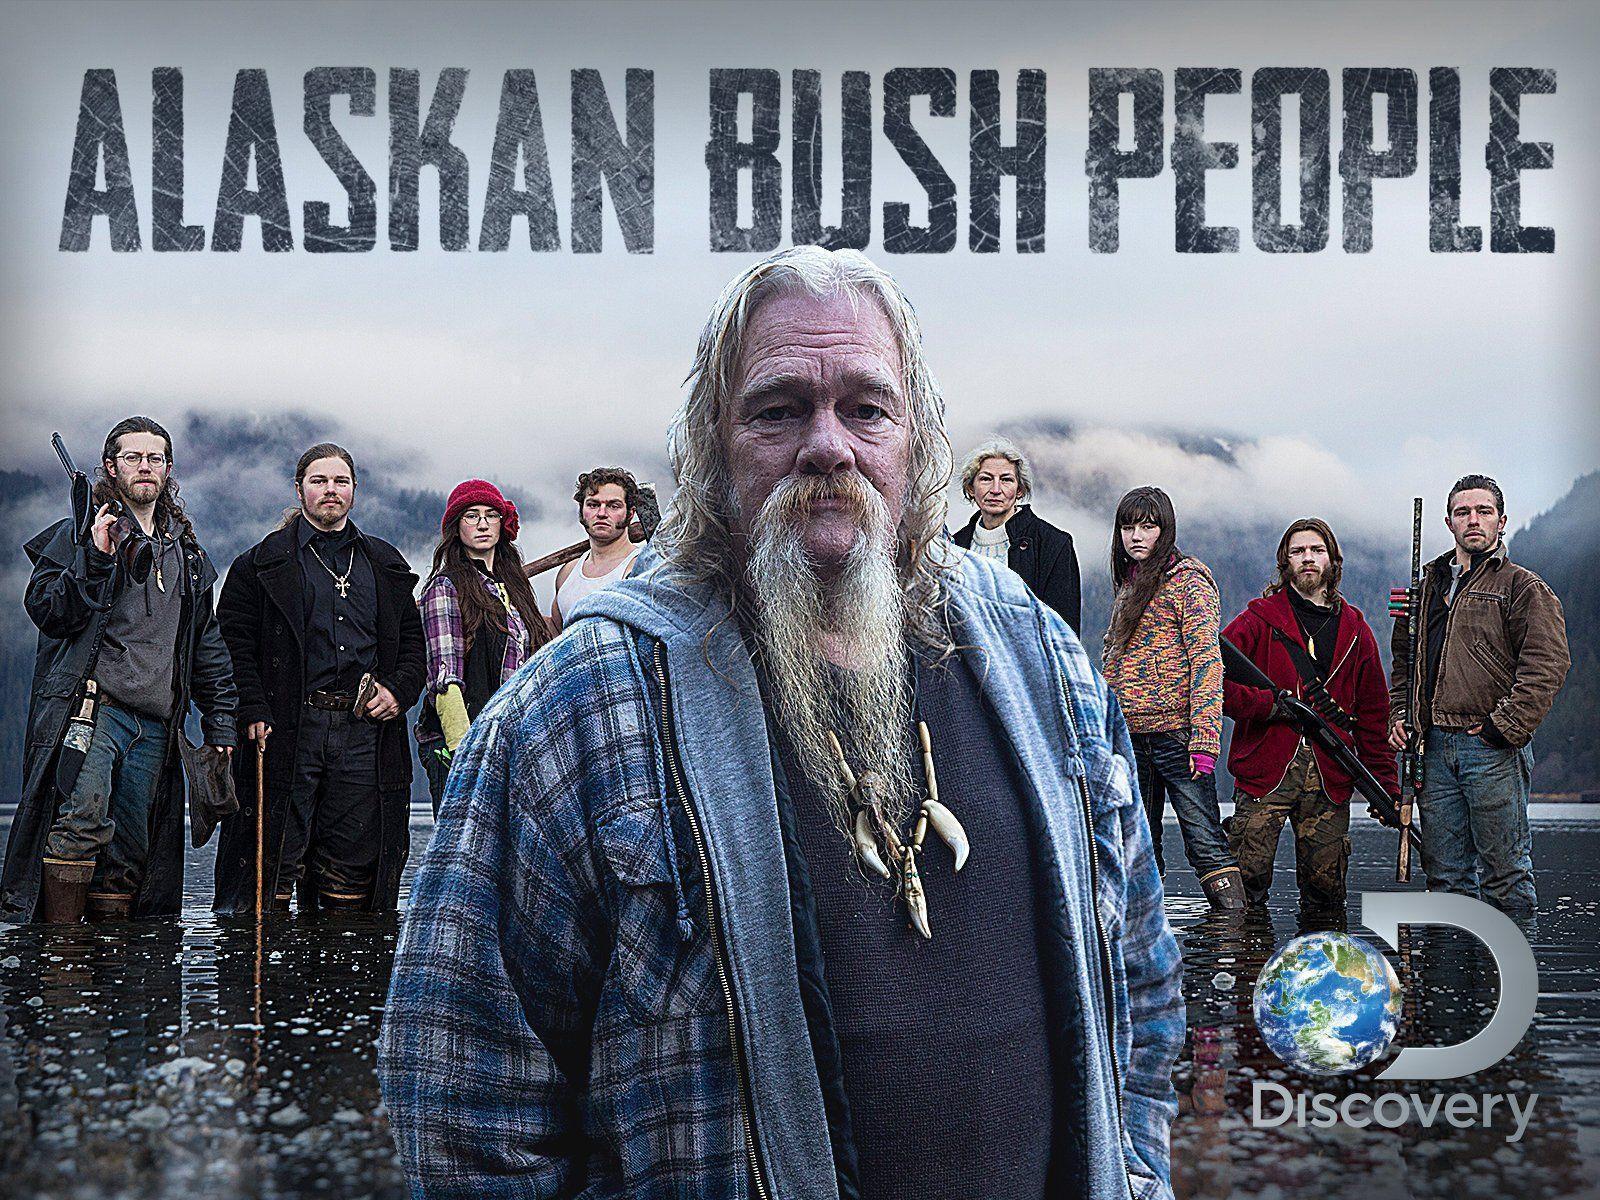 Alaskan Bush People Season 2: Amazon Digital Services LLC